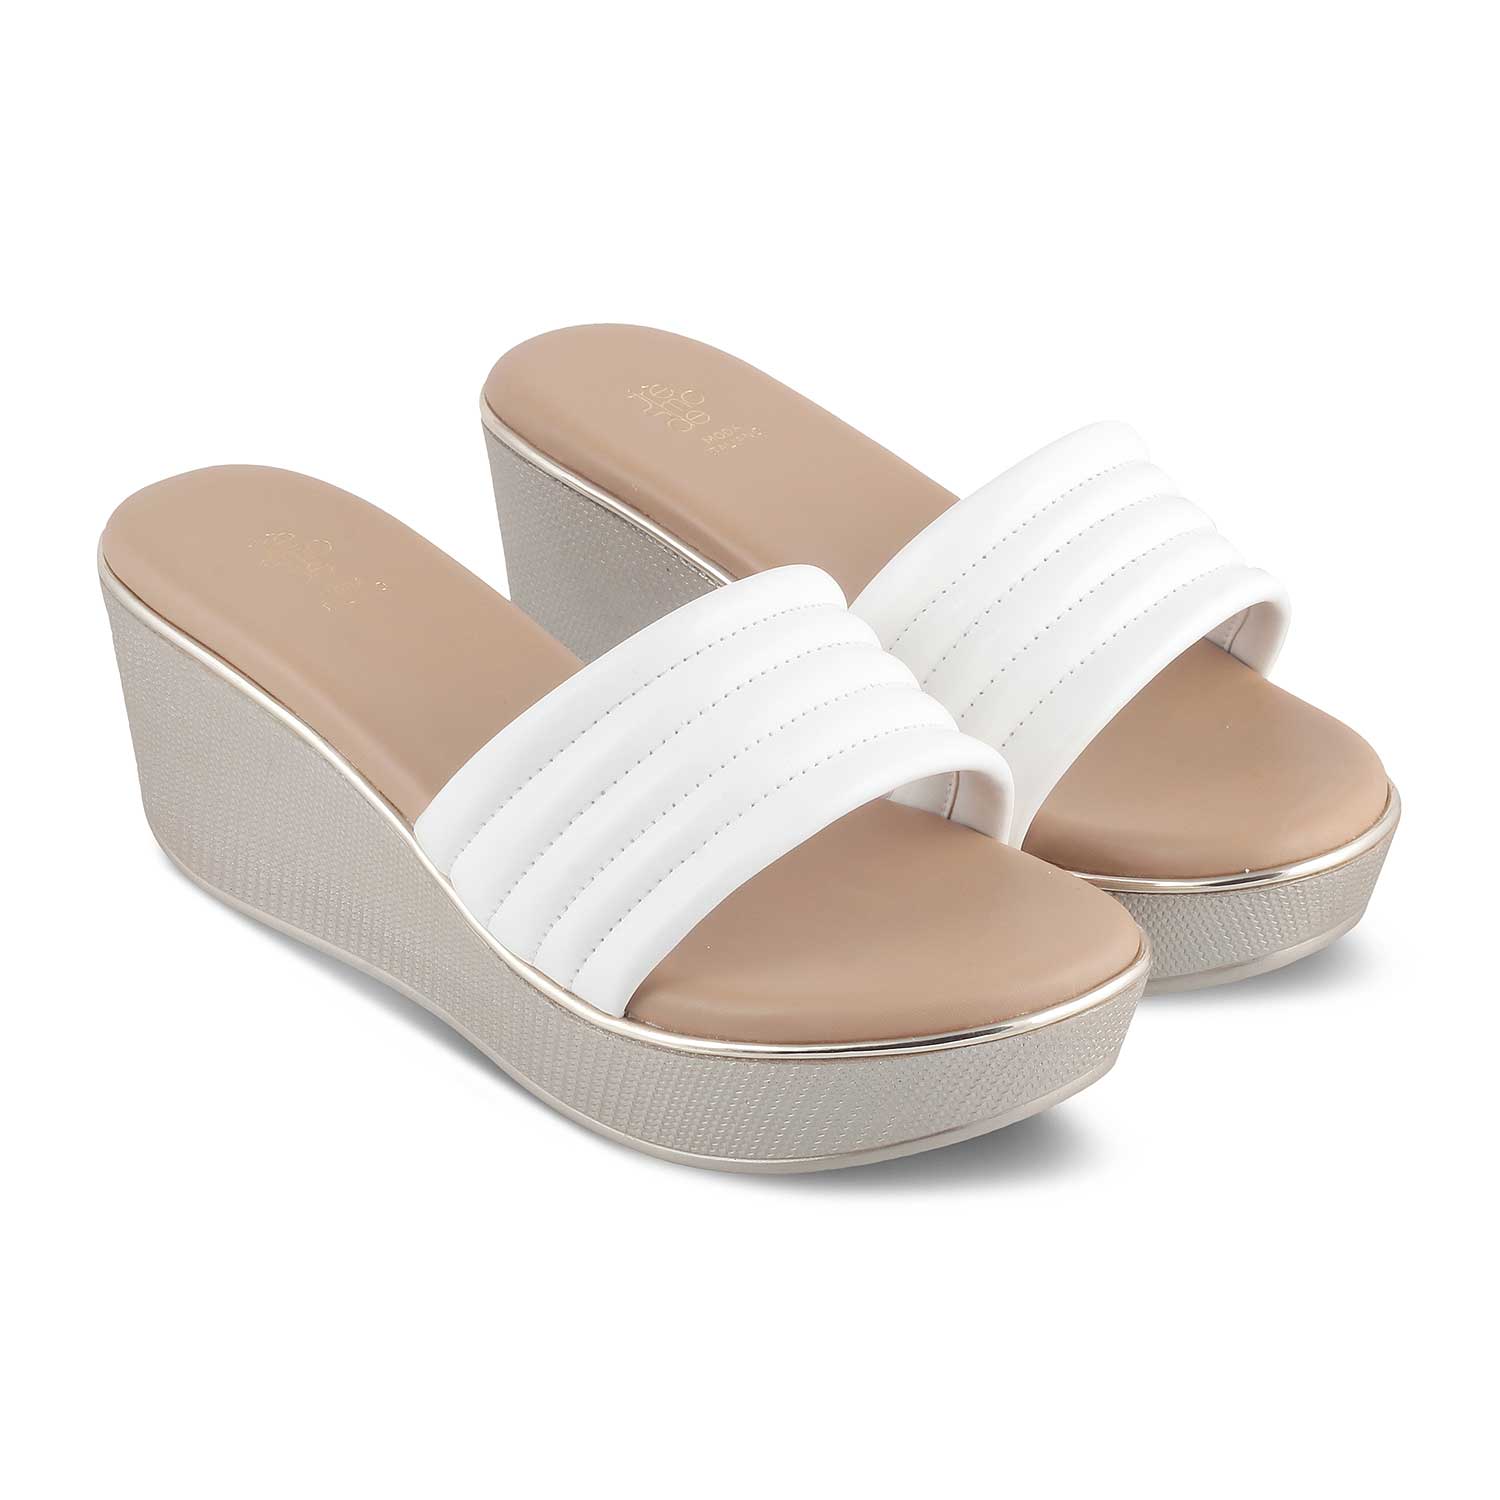 The Skledge White Women's Dress Wedge Sandals Tresmode